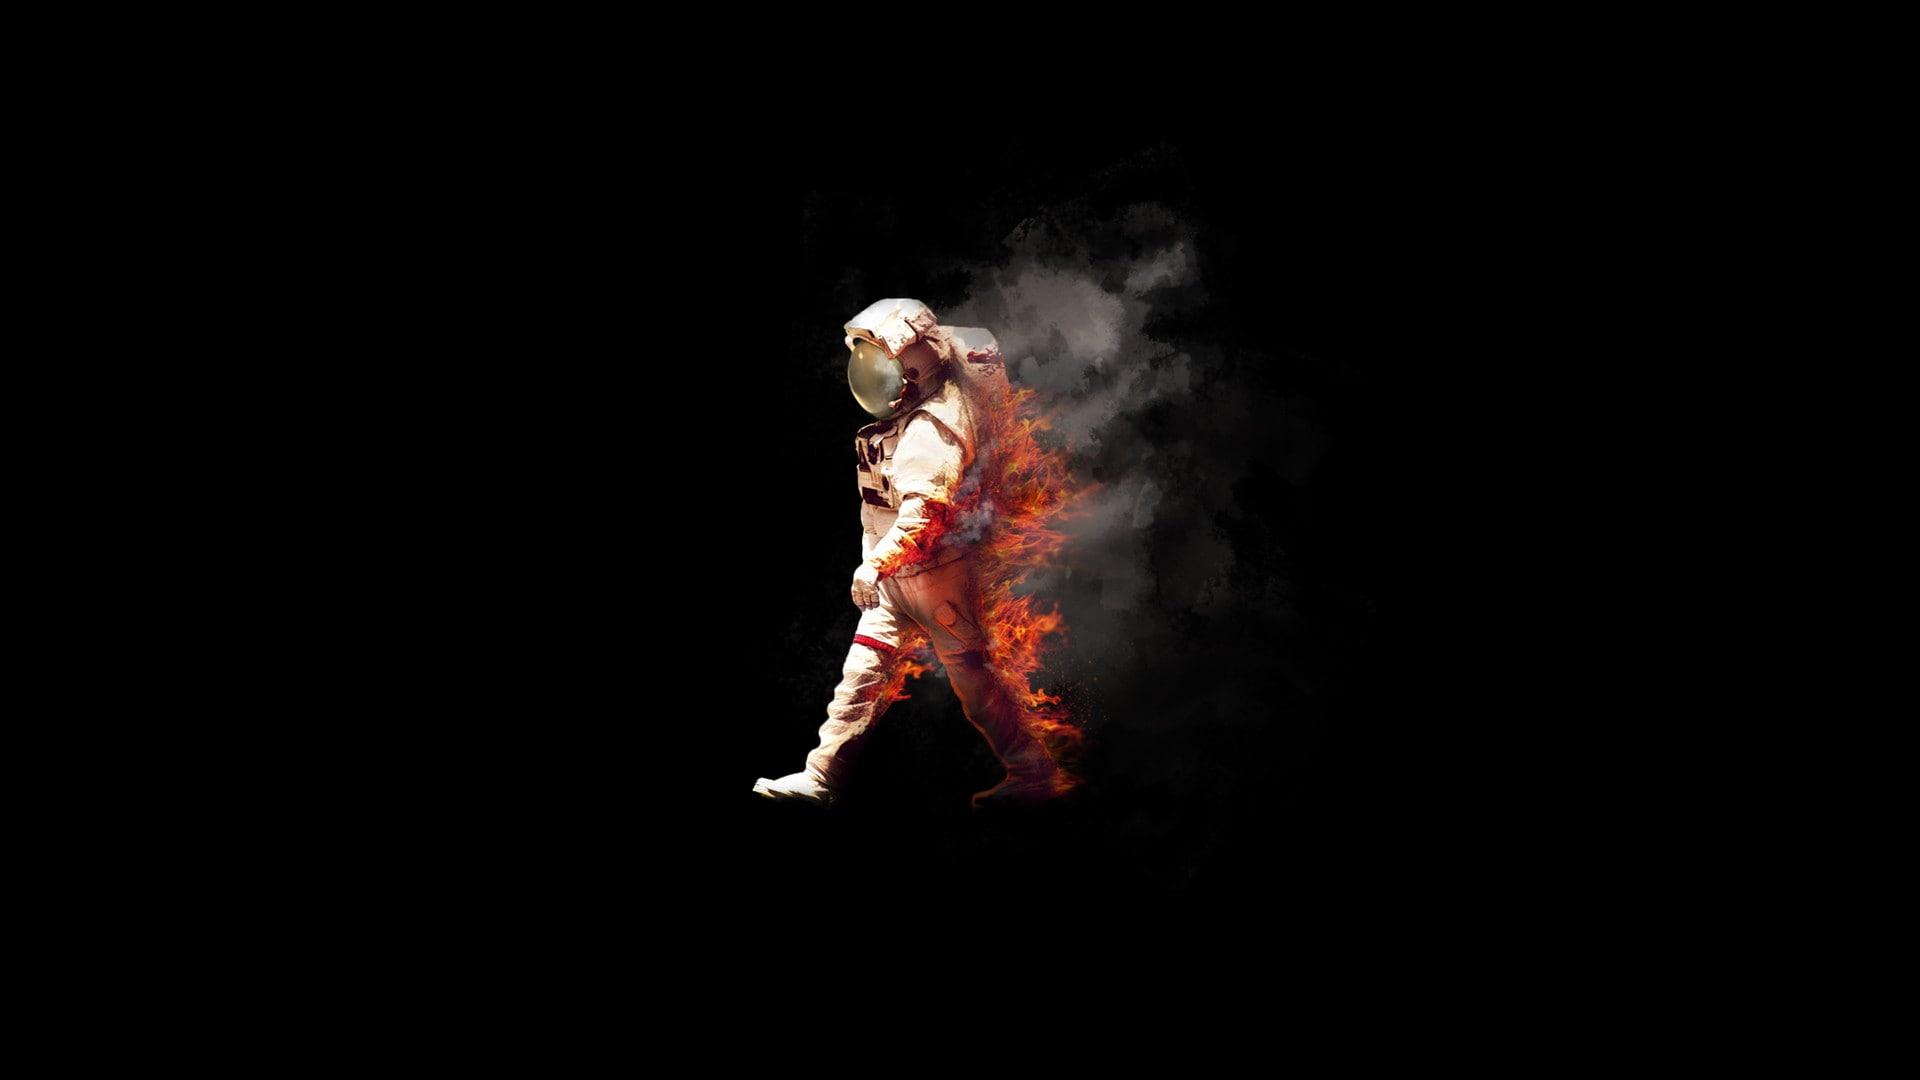 HD wallpaper: white astronaut costume, space, fire, burn, spacesuit